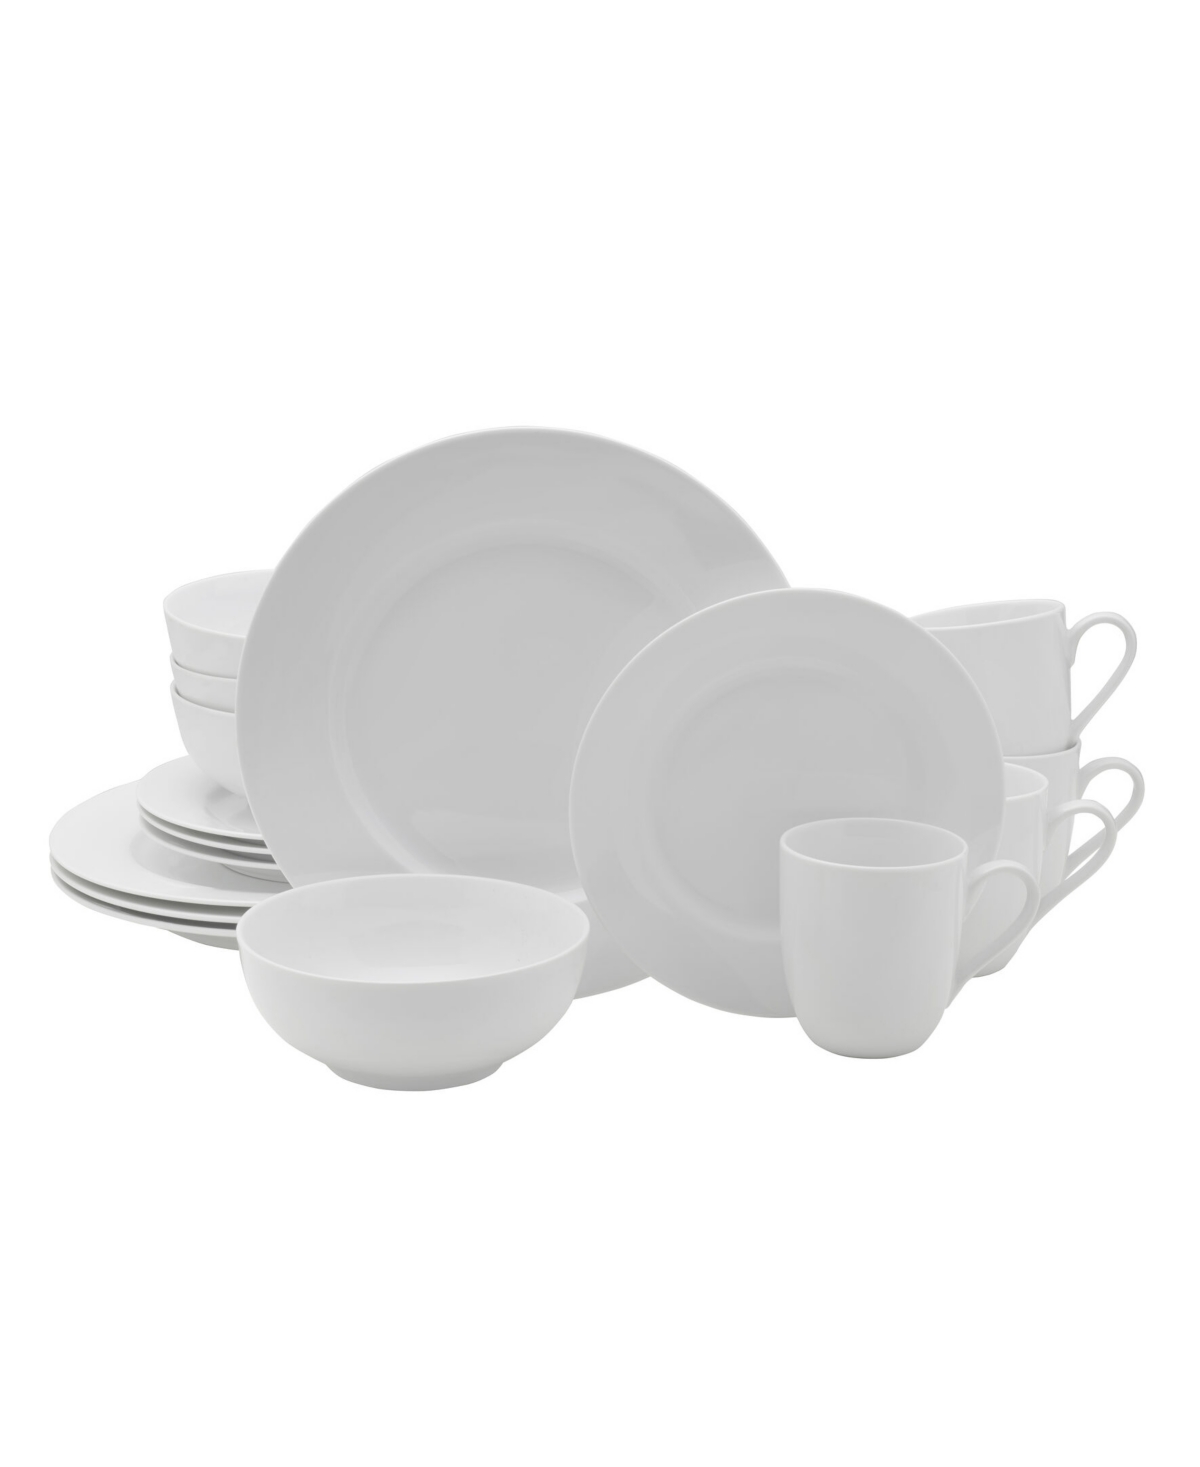 Everyday Whiteware Classic Rim 16 Piece Dinnerware Set, Service for 4 - White